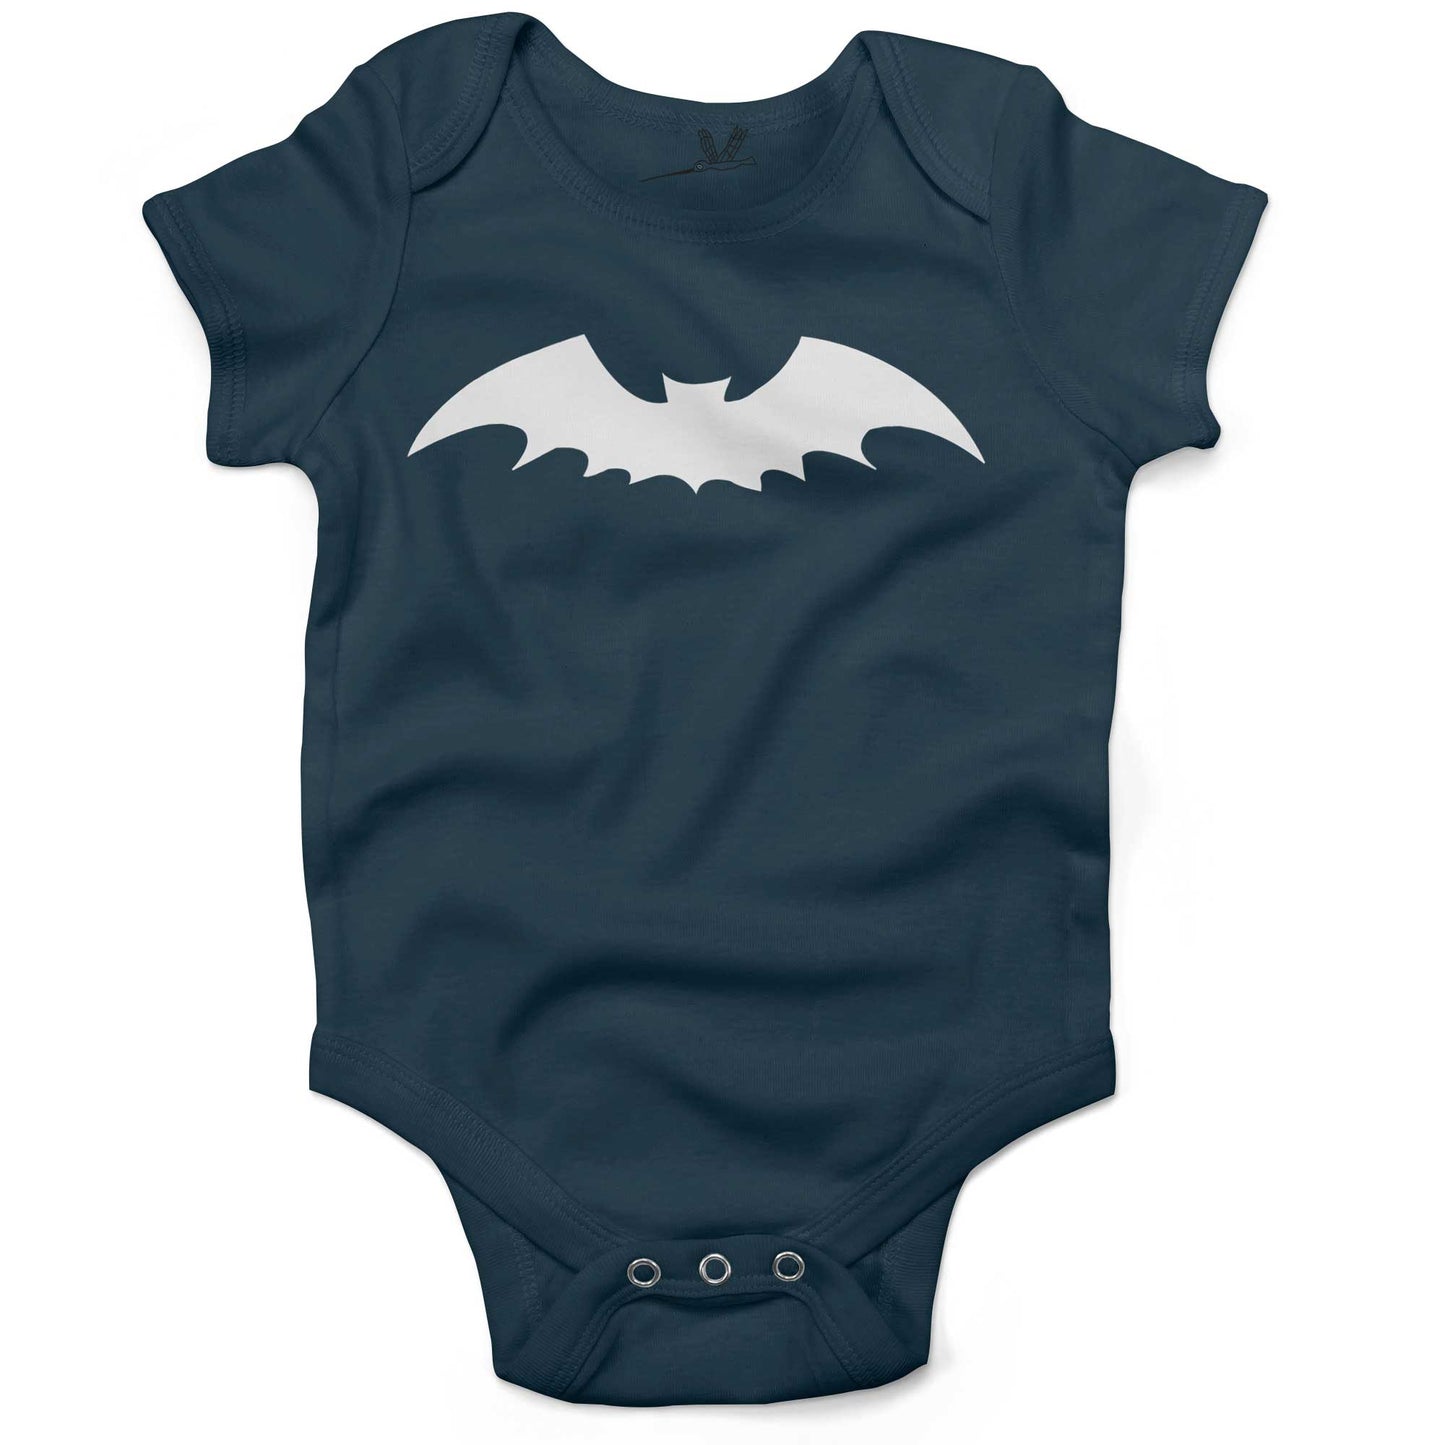 Gothic Bat Infant Bodysuit or Raglan Tee-Organic Pacific Blue-3-6 months